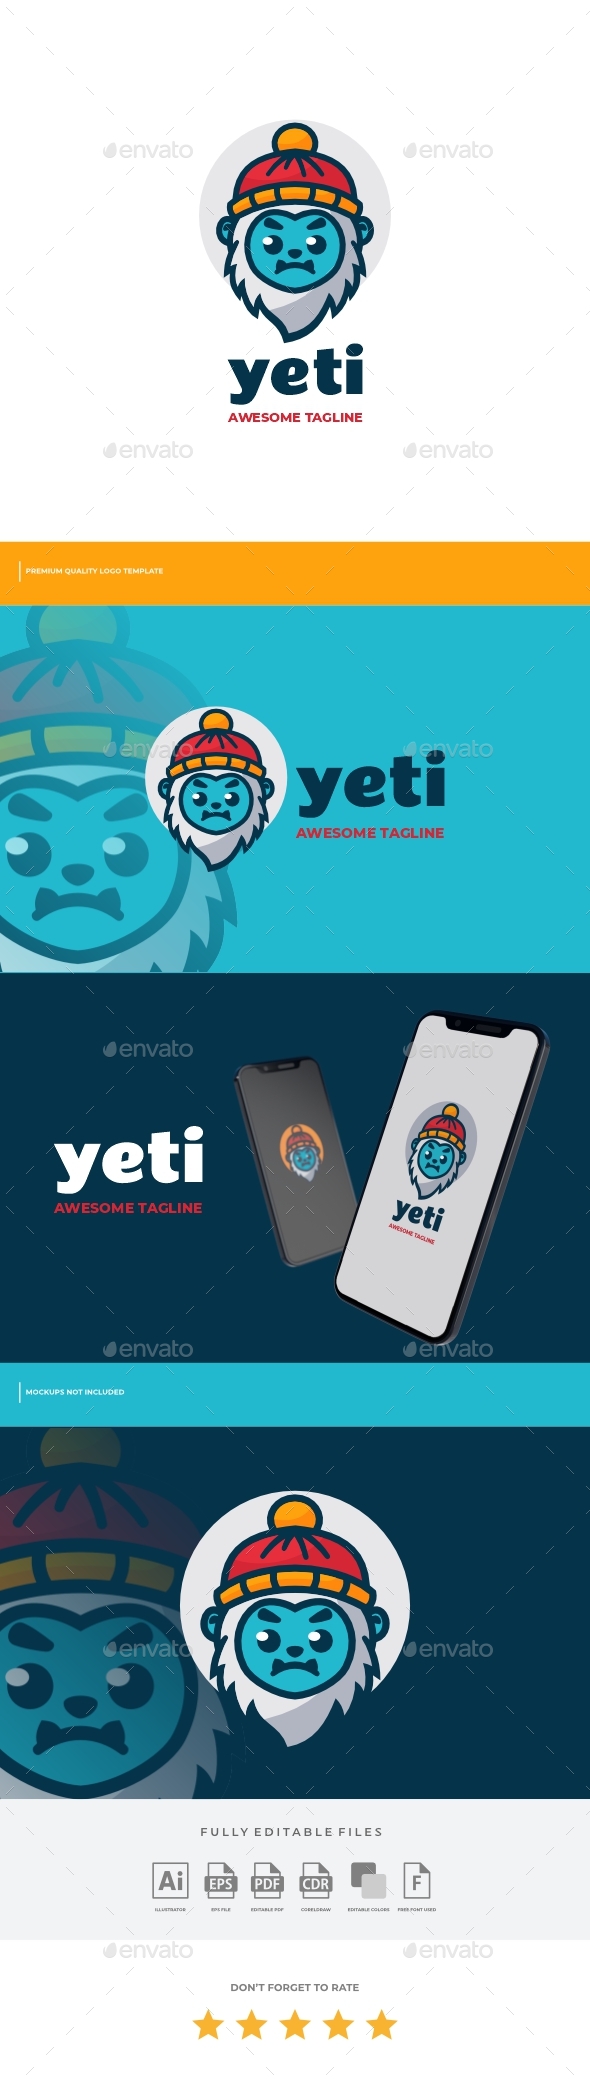 [DOWNLOAD]Yeti Mascot Cartoon Logo Template